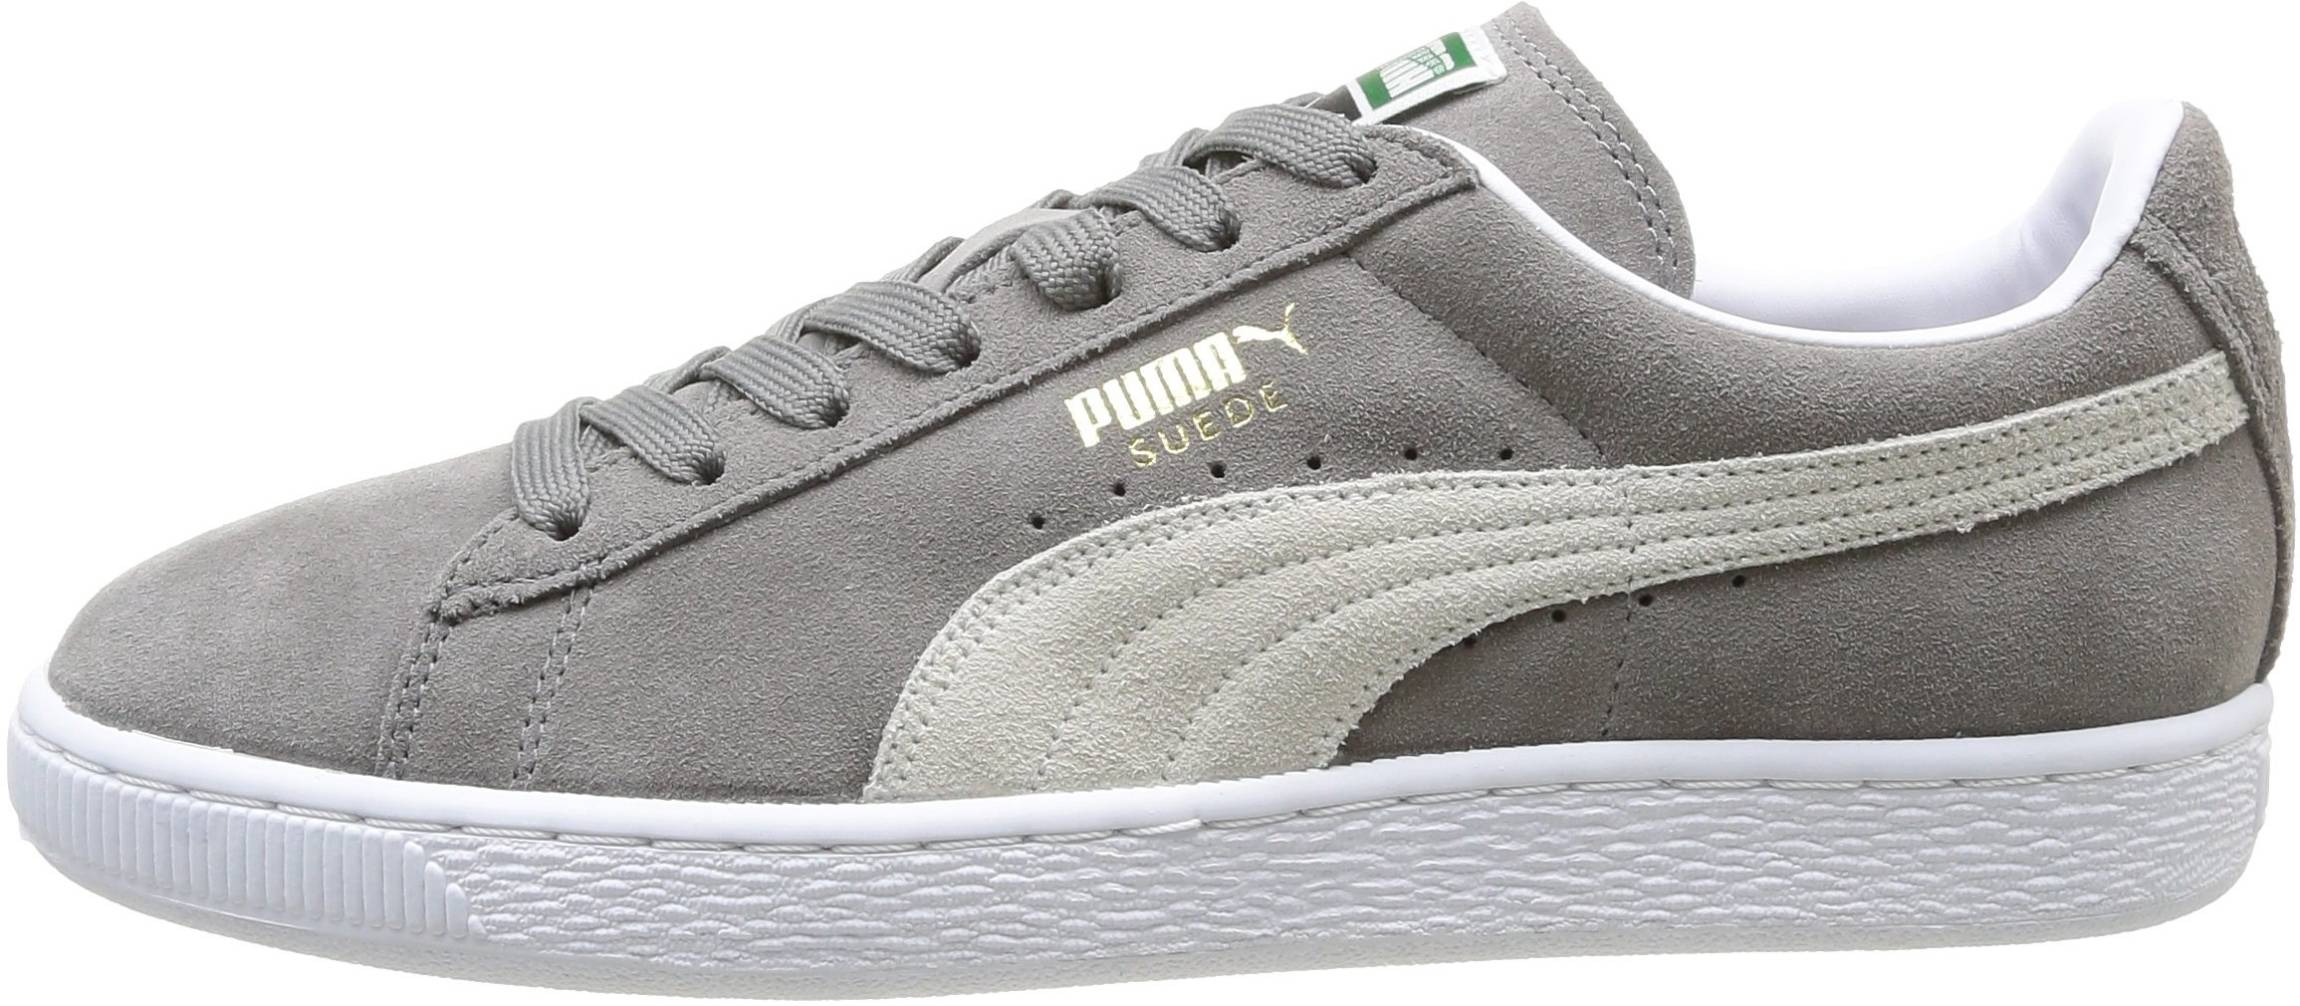 grey suede puma sneakers